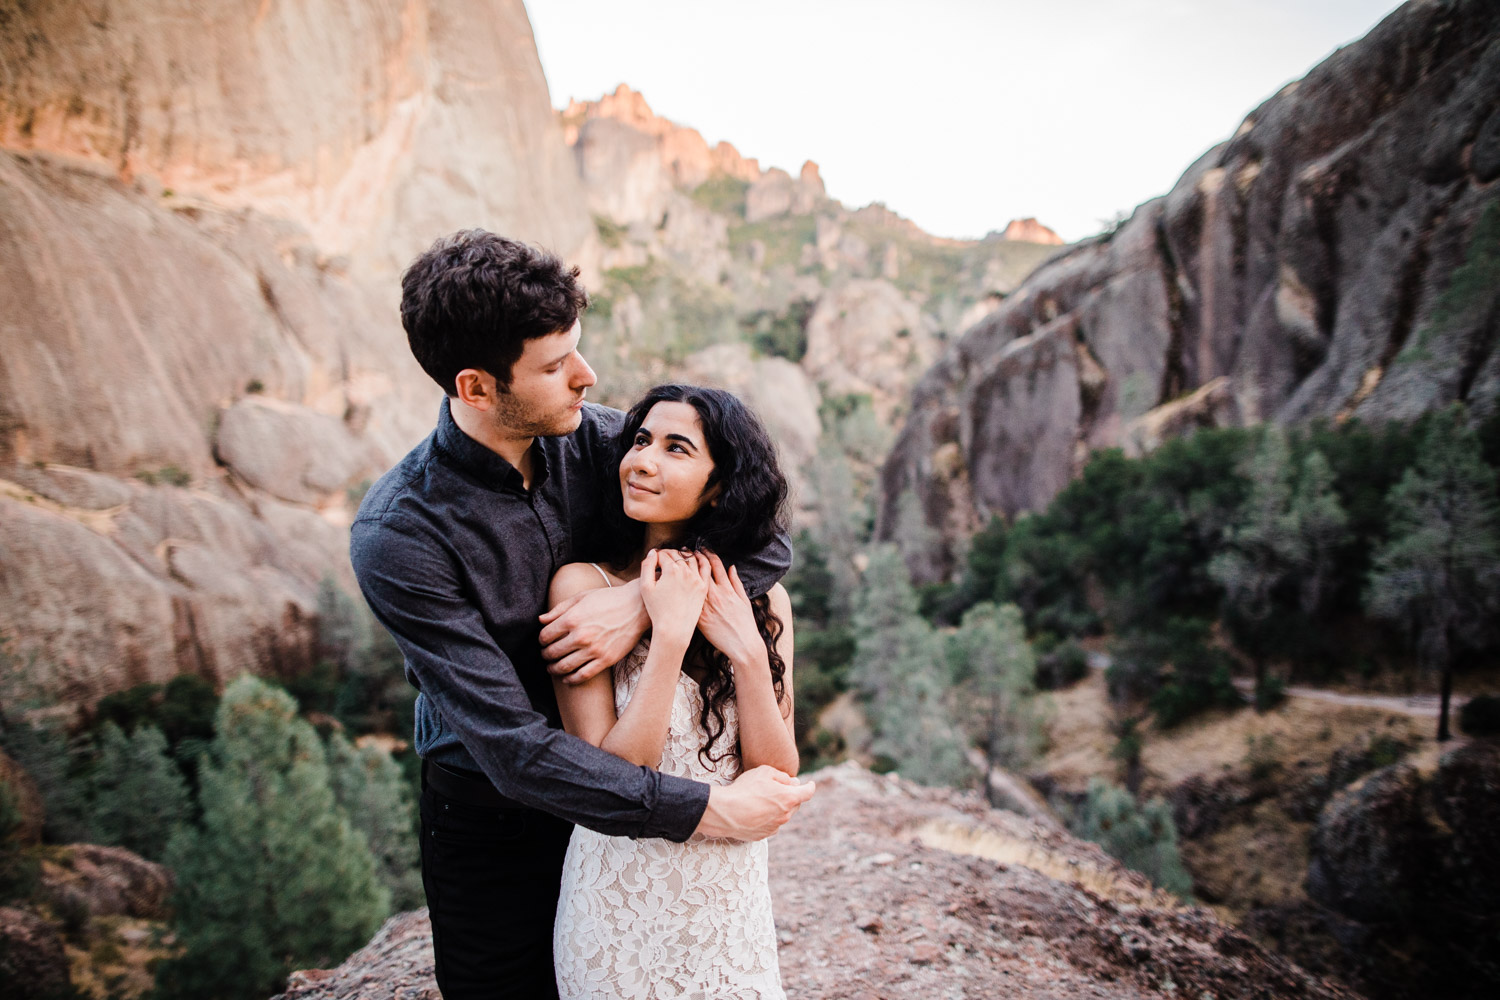 An adventurous hiking national park elopement style shoot.